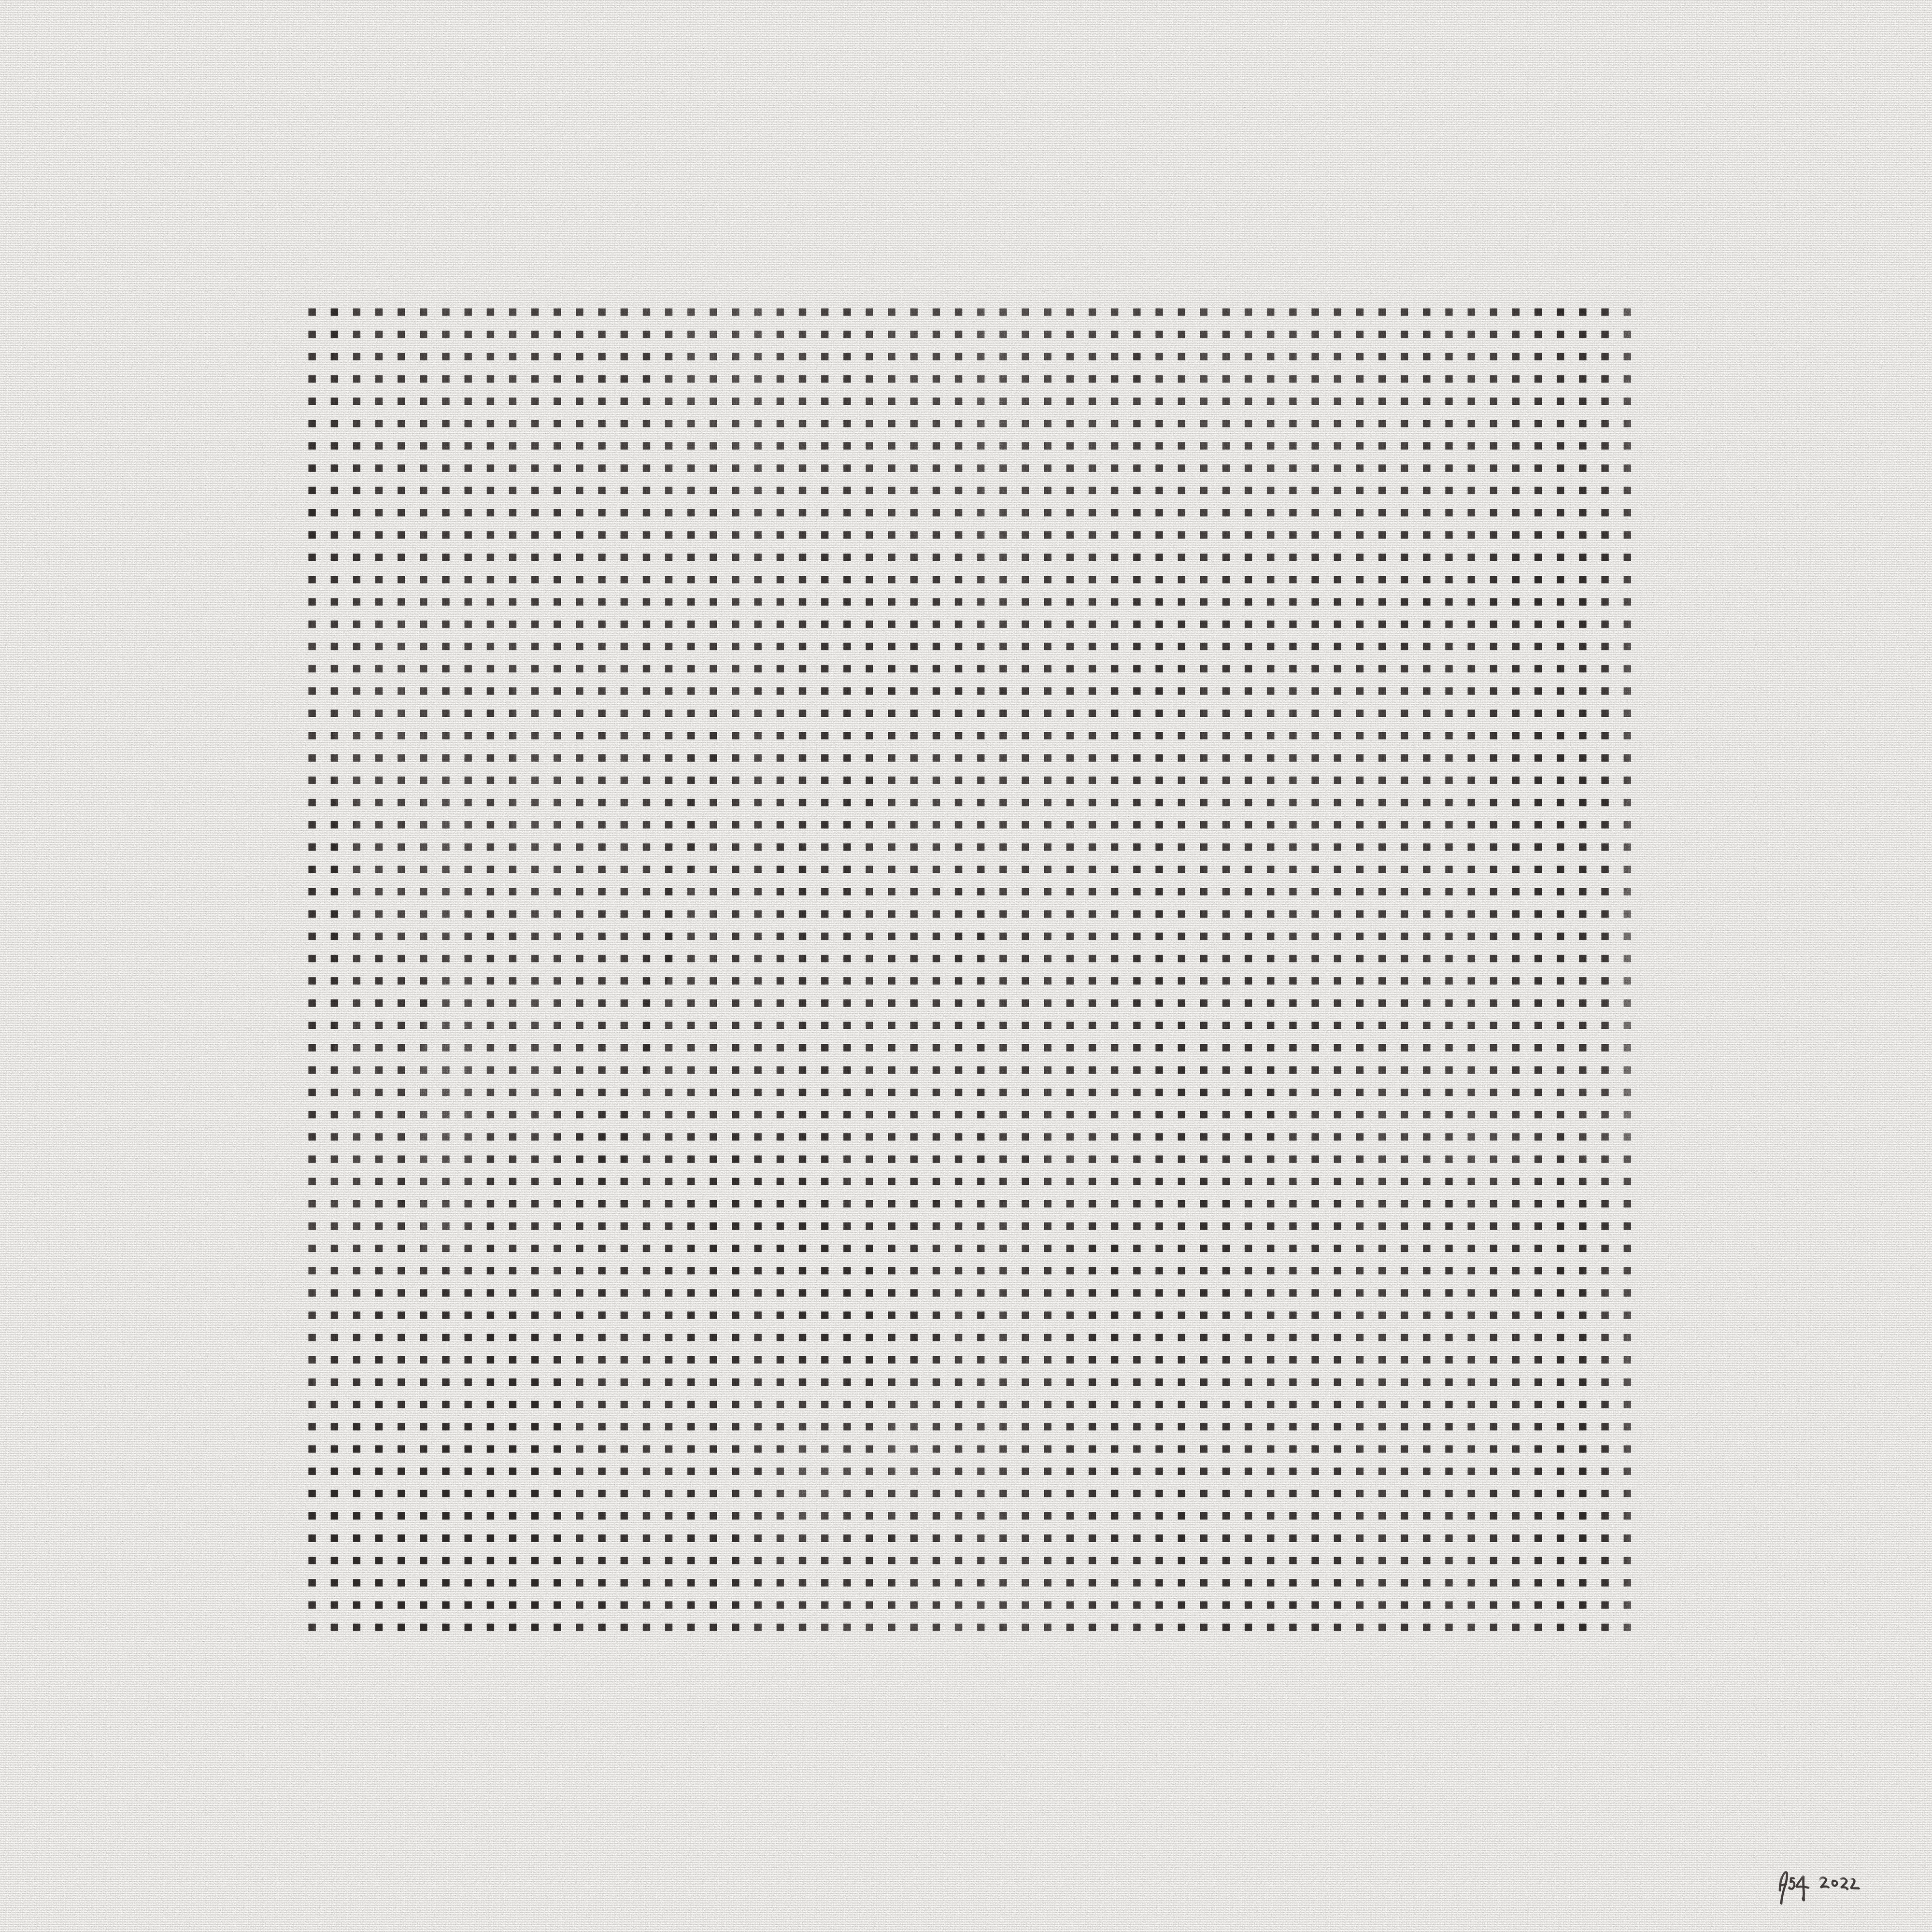 I saw a field of dots